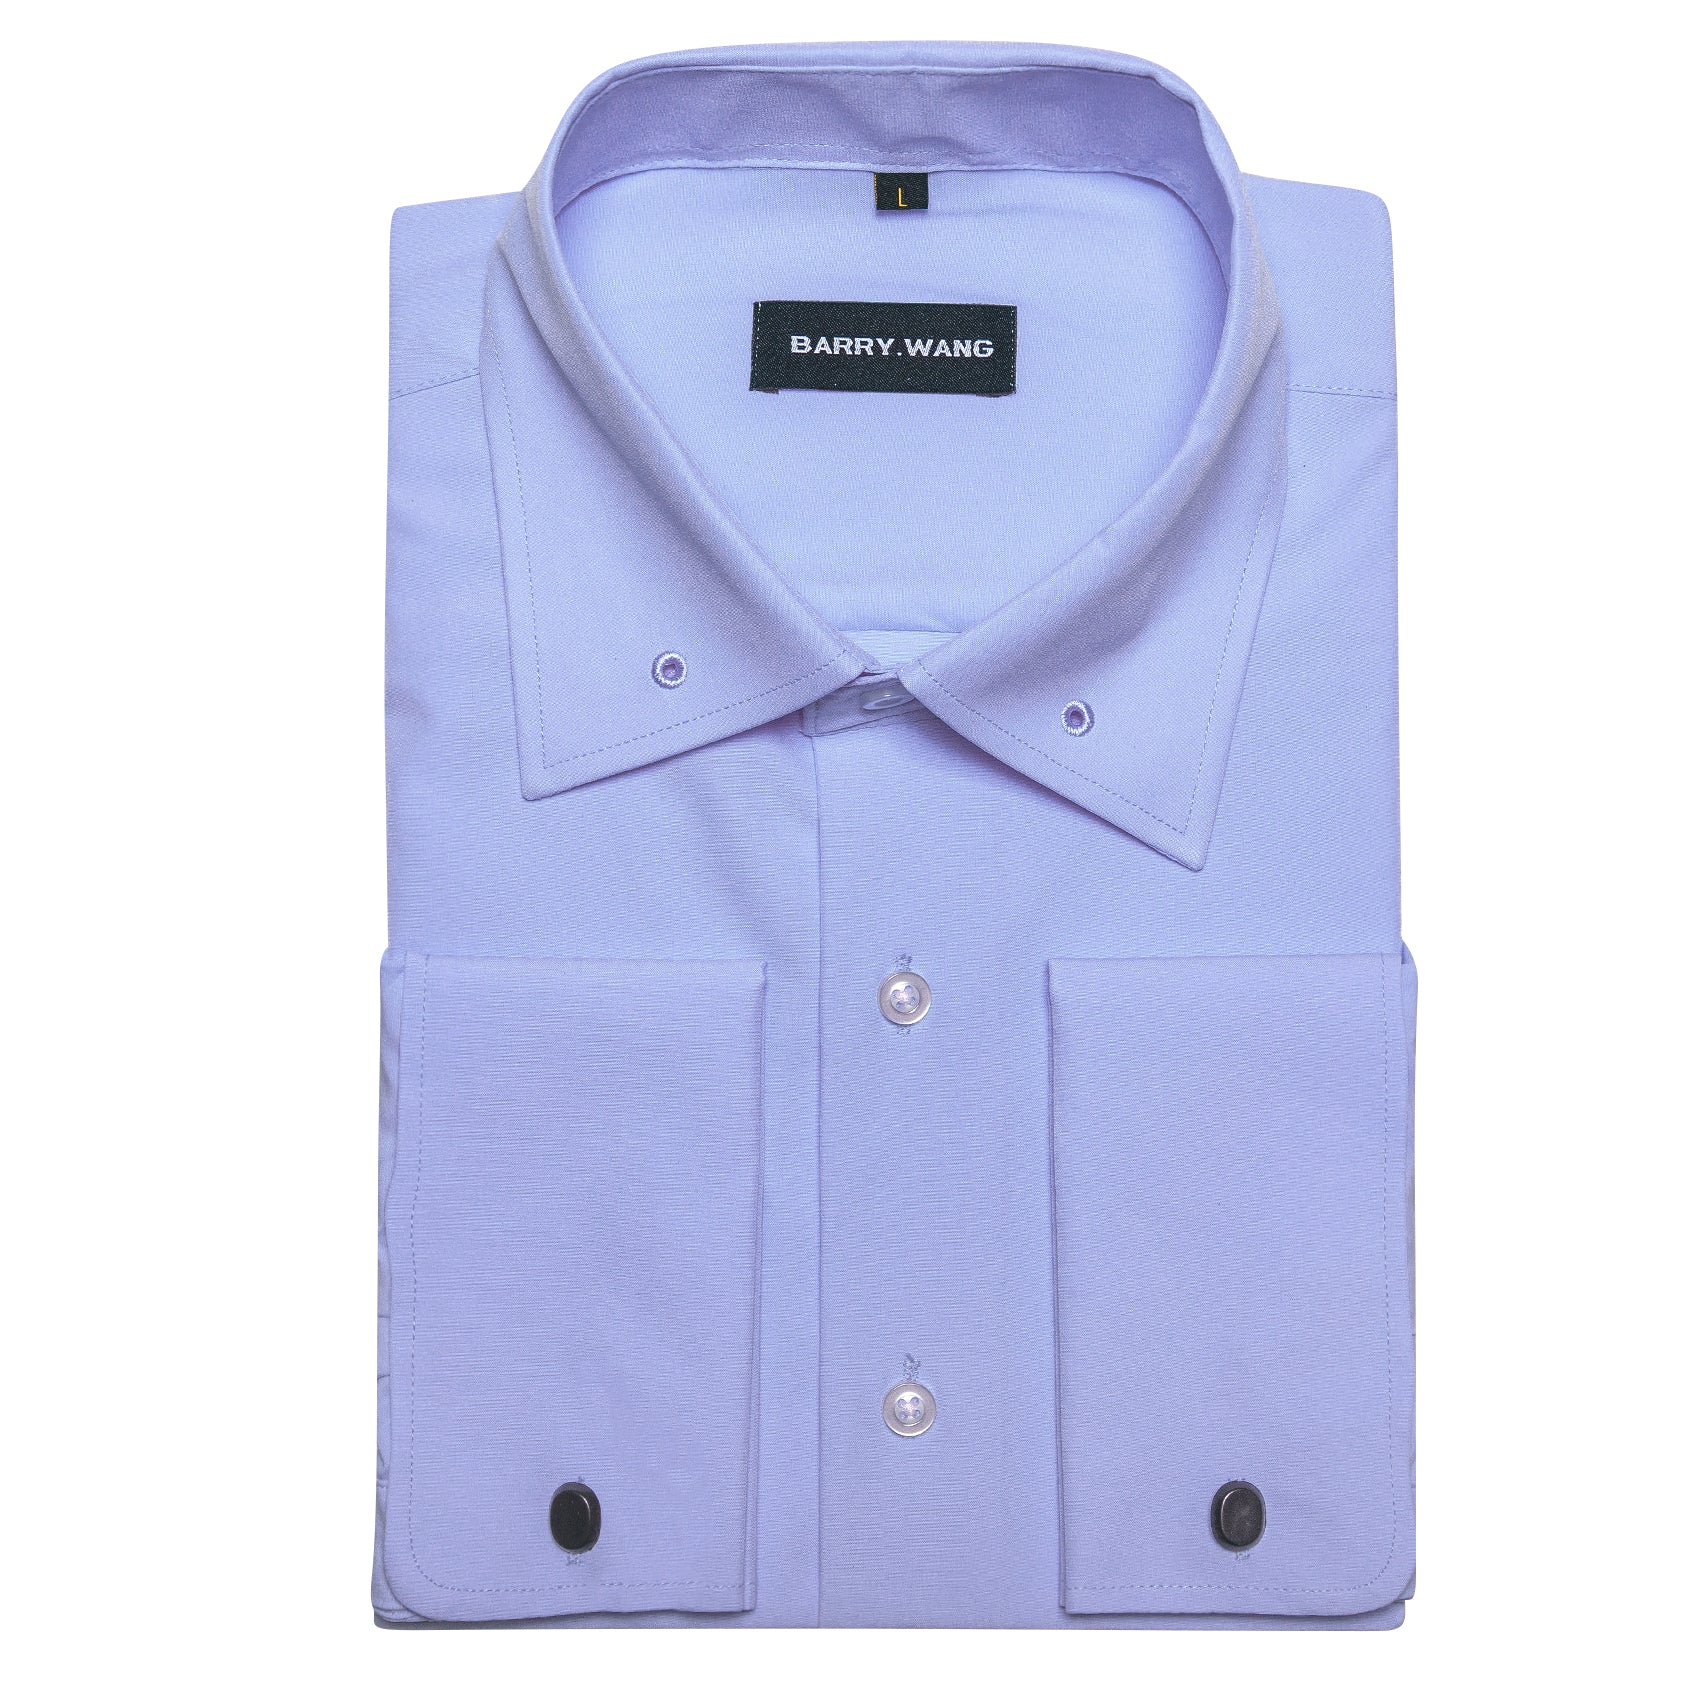 Barry.wang Medium Purple Solid Silk Shirt with Collar Pin